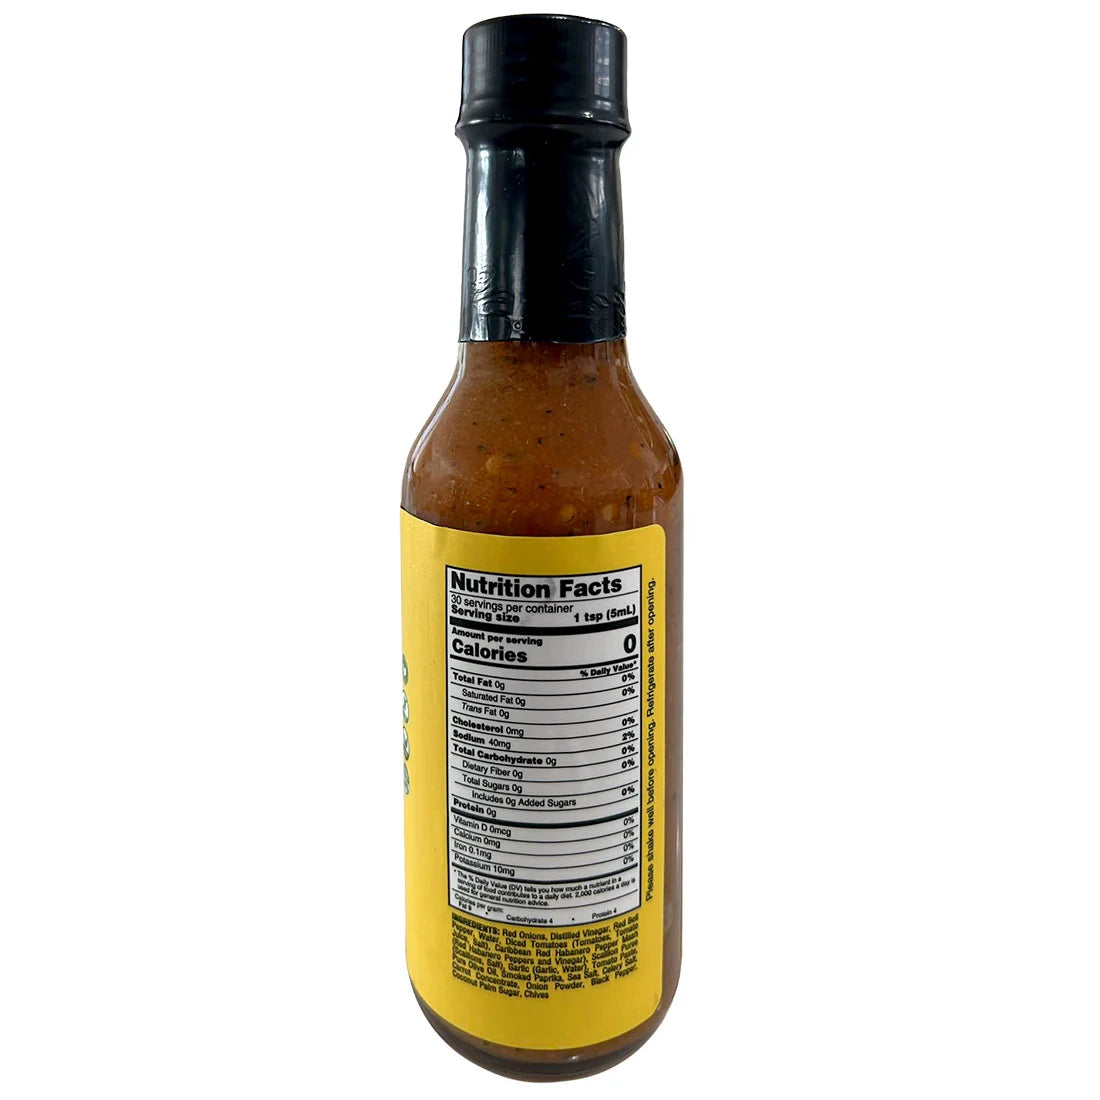 The “HOT “Plant-based KRU Sauce